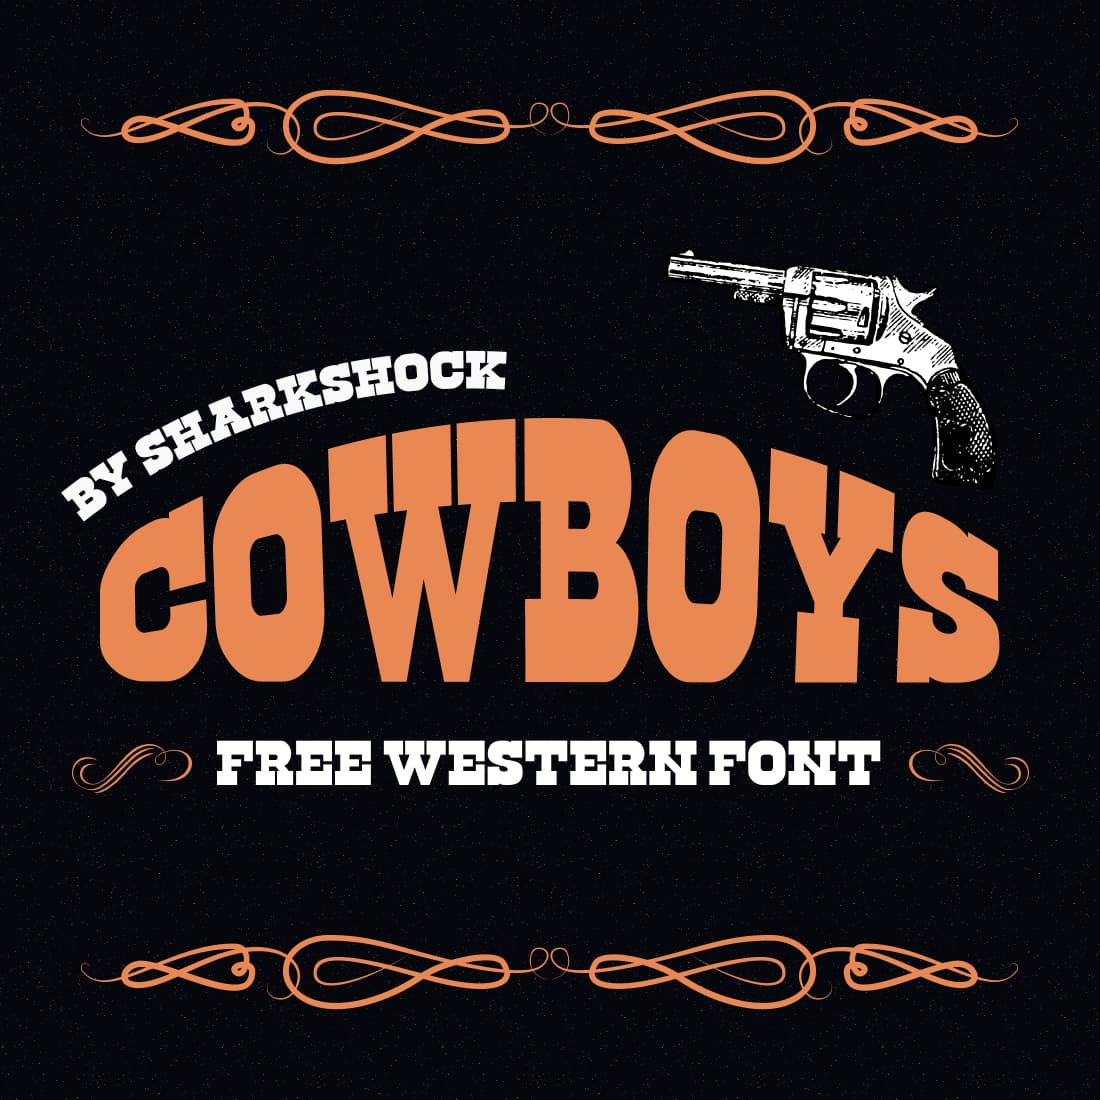 Cowboy font free Main cover image by MasterBundles.